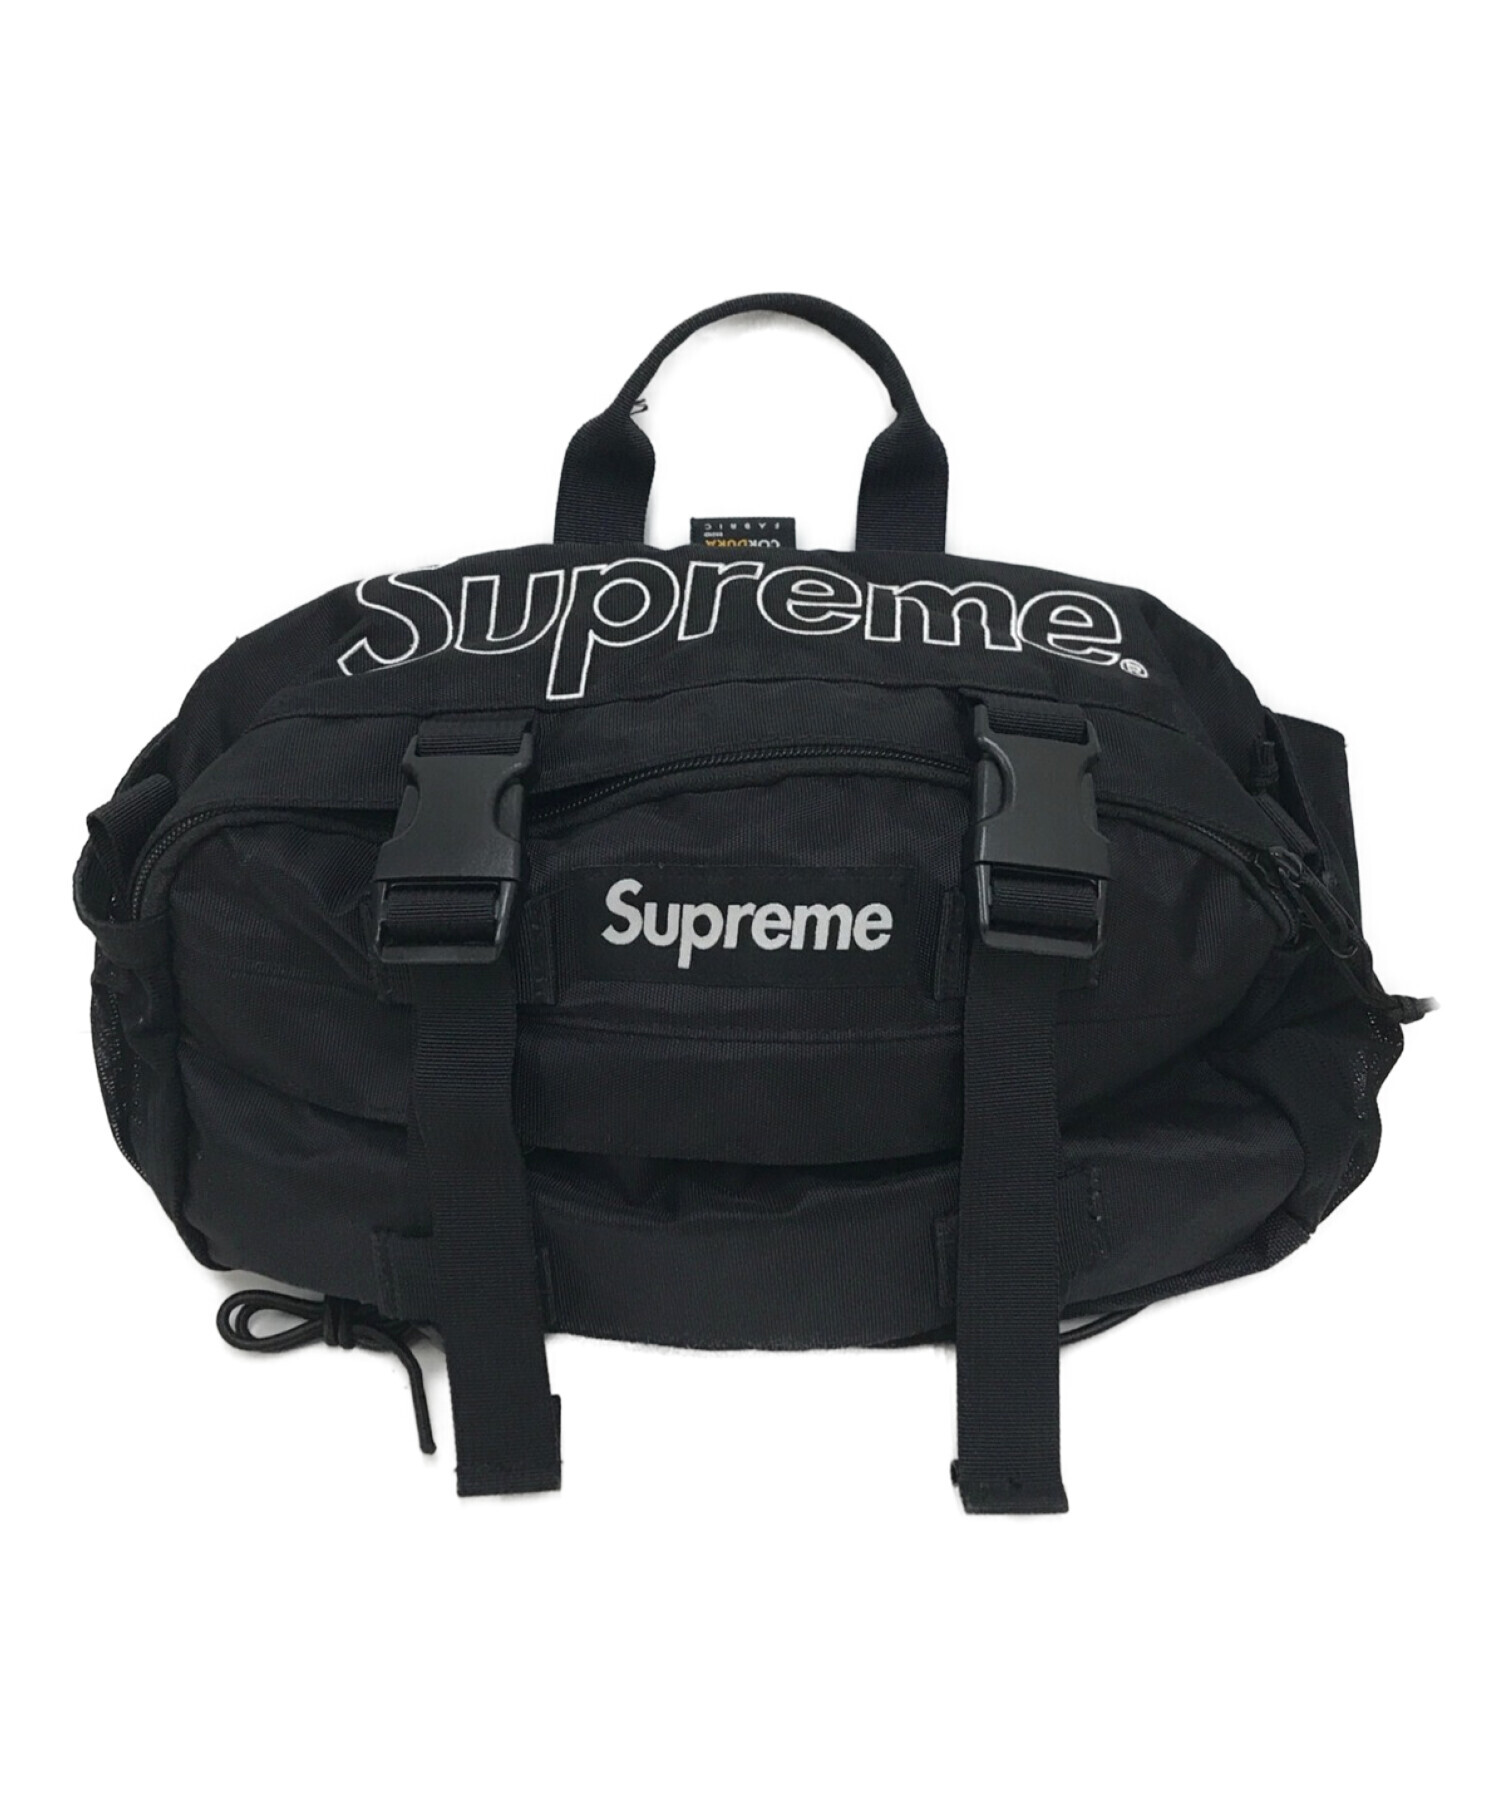 Supreme 19fw waist bag Black ウエストバッグ